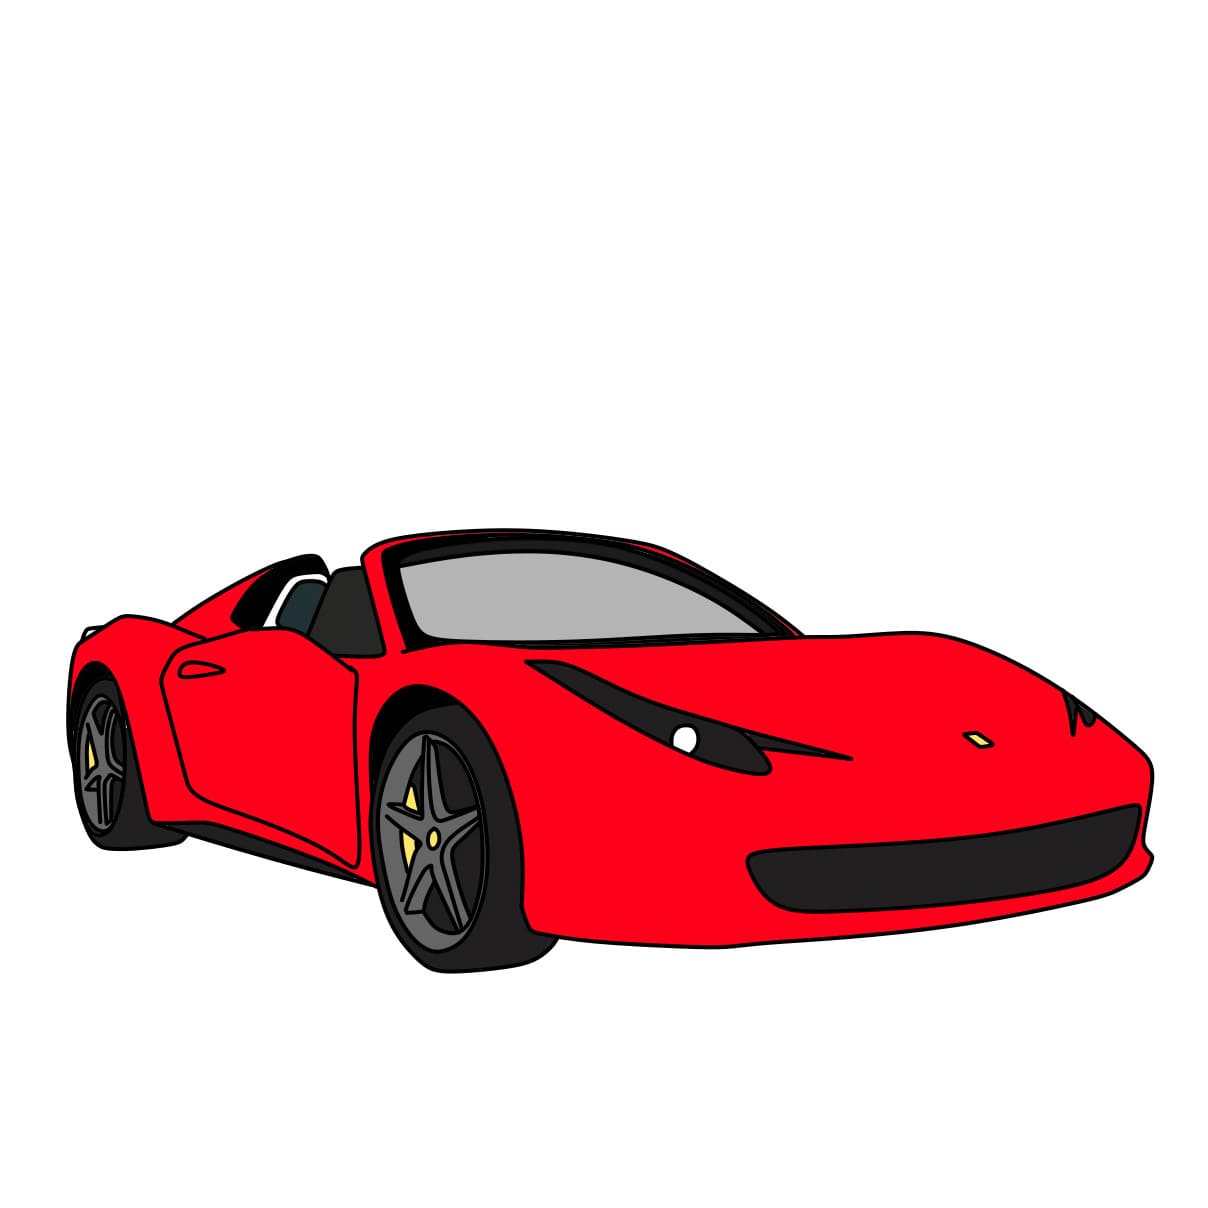 Cach-ve-xe-Ferrari-Buoc-4-6